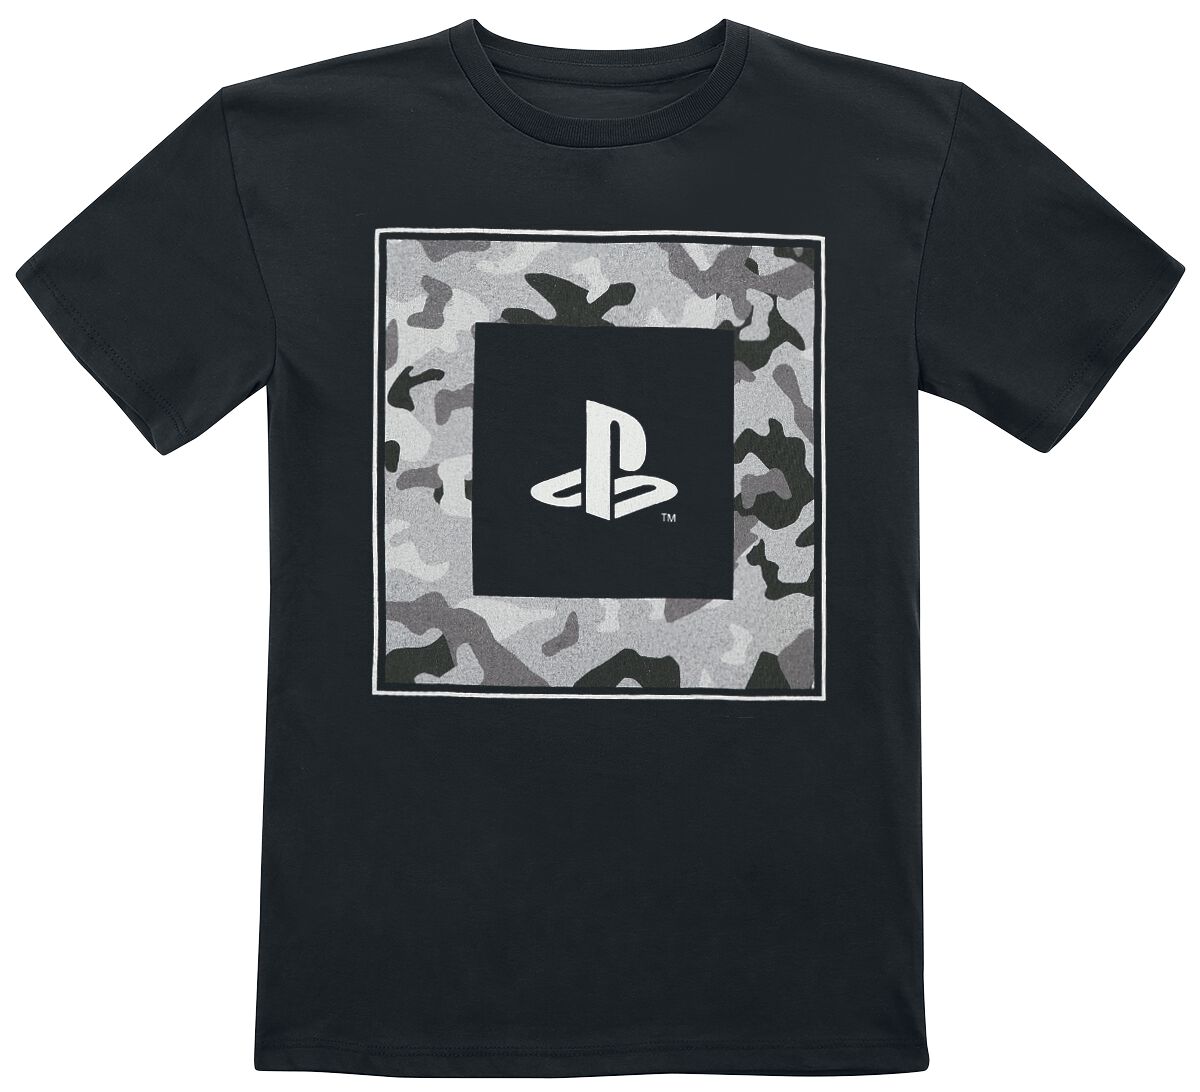 Playstation Kids - Camo Box T-Shirt black